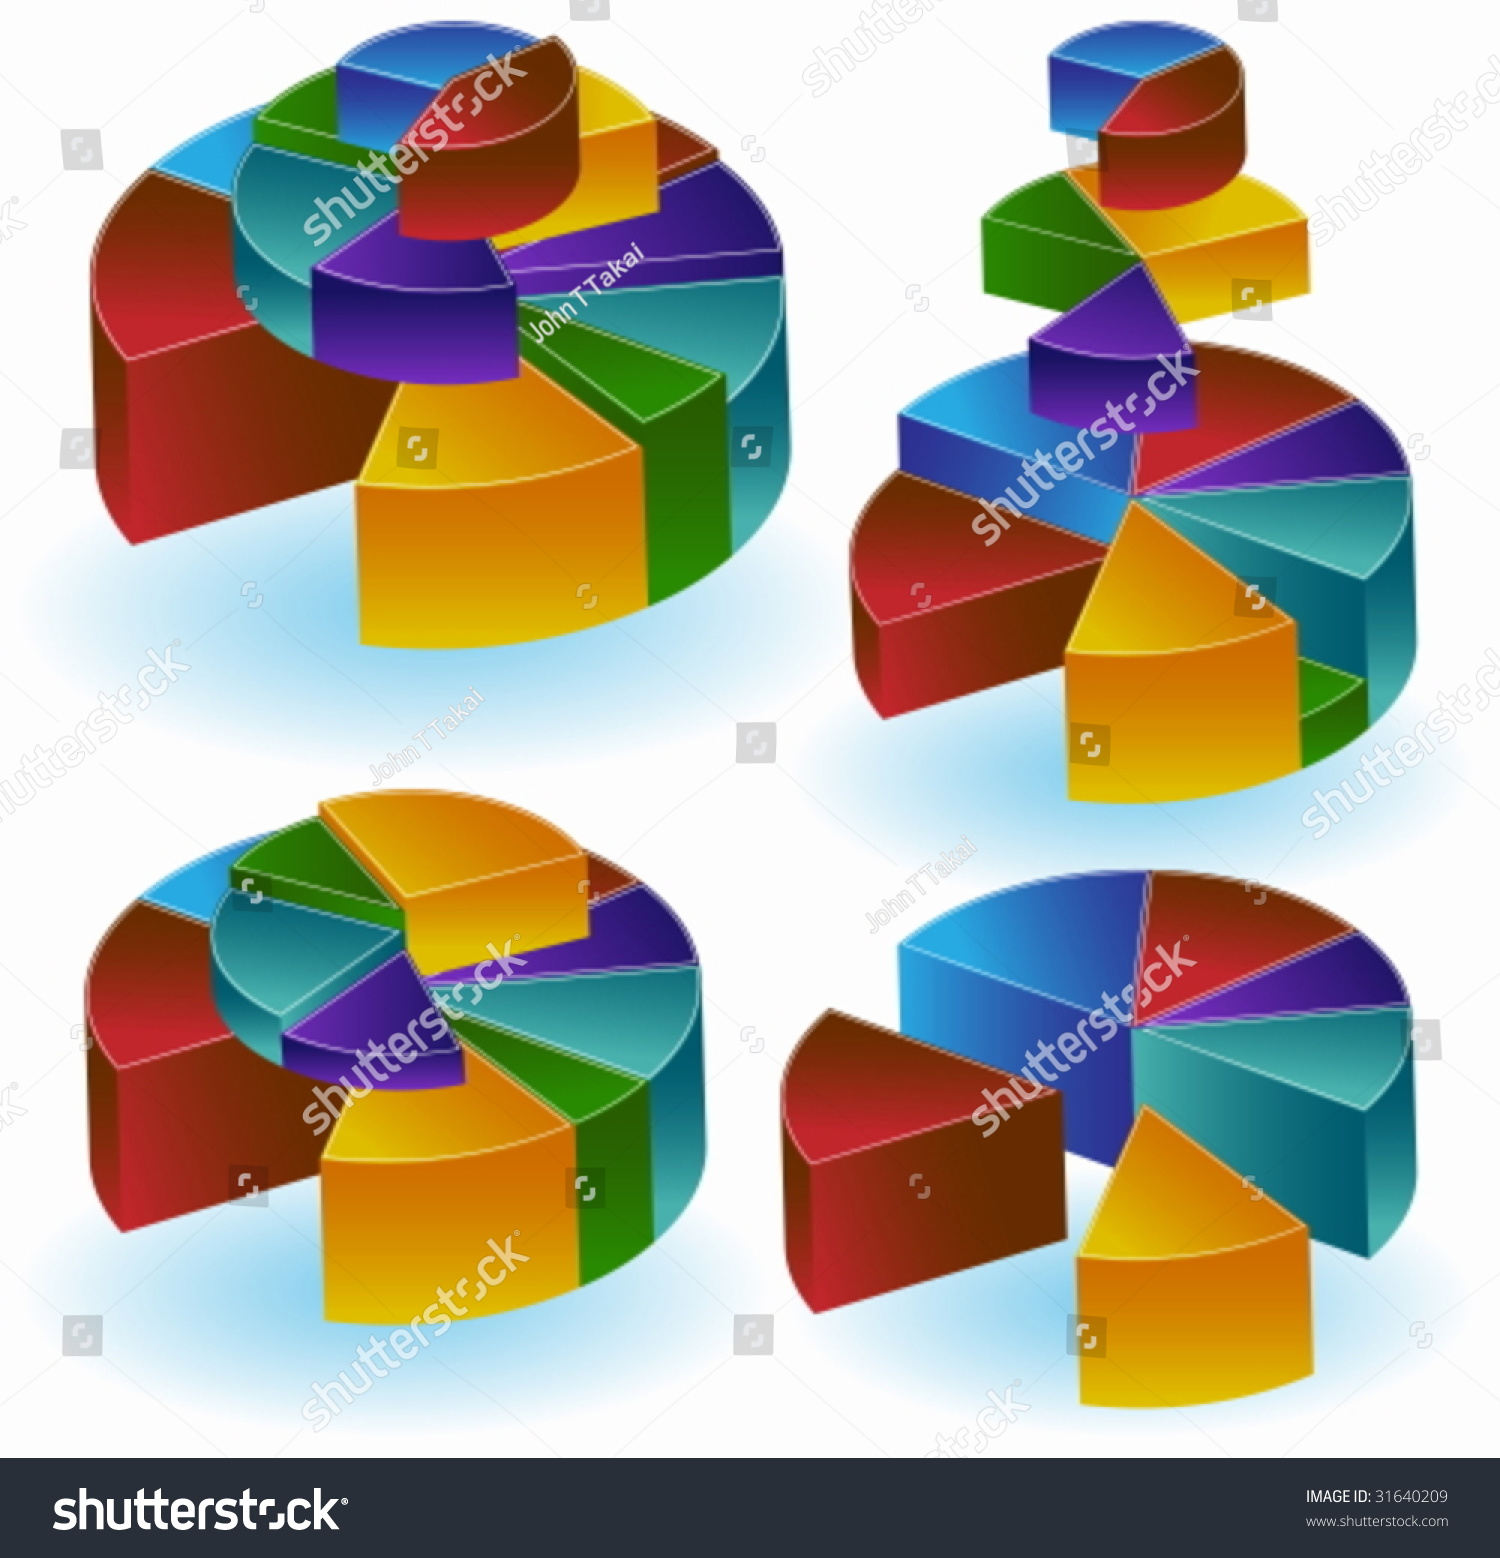 3d Pie Chart Using D3 Js